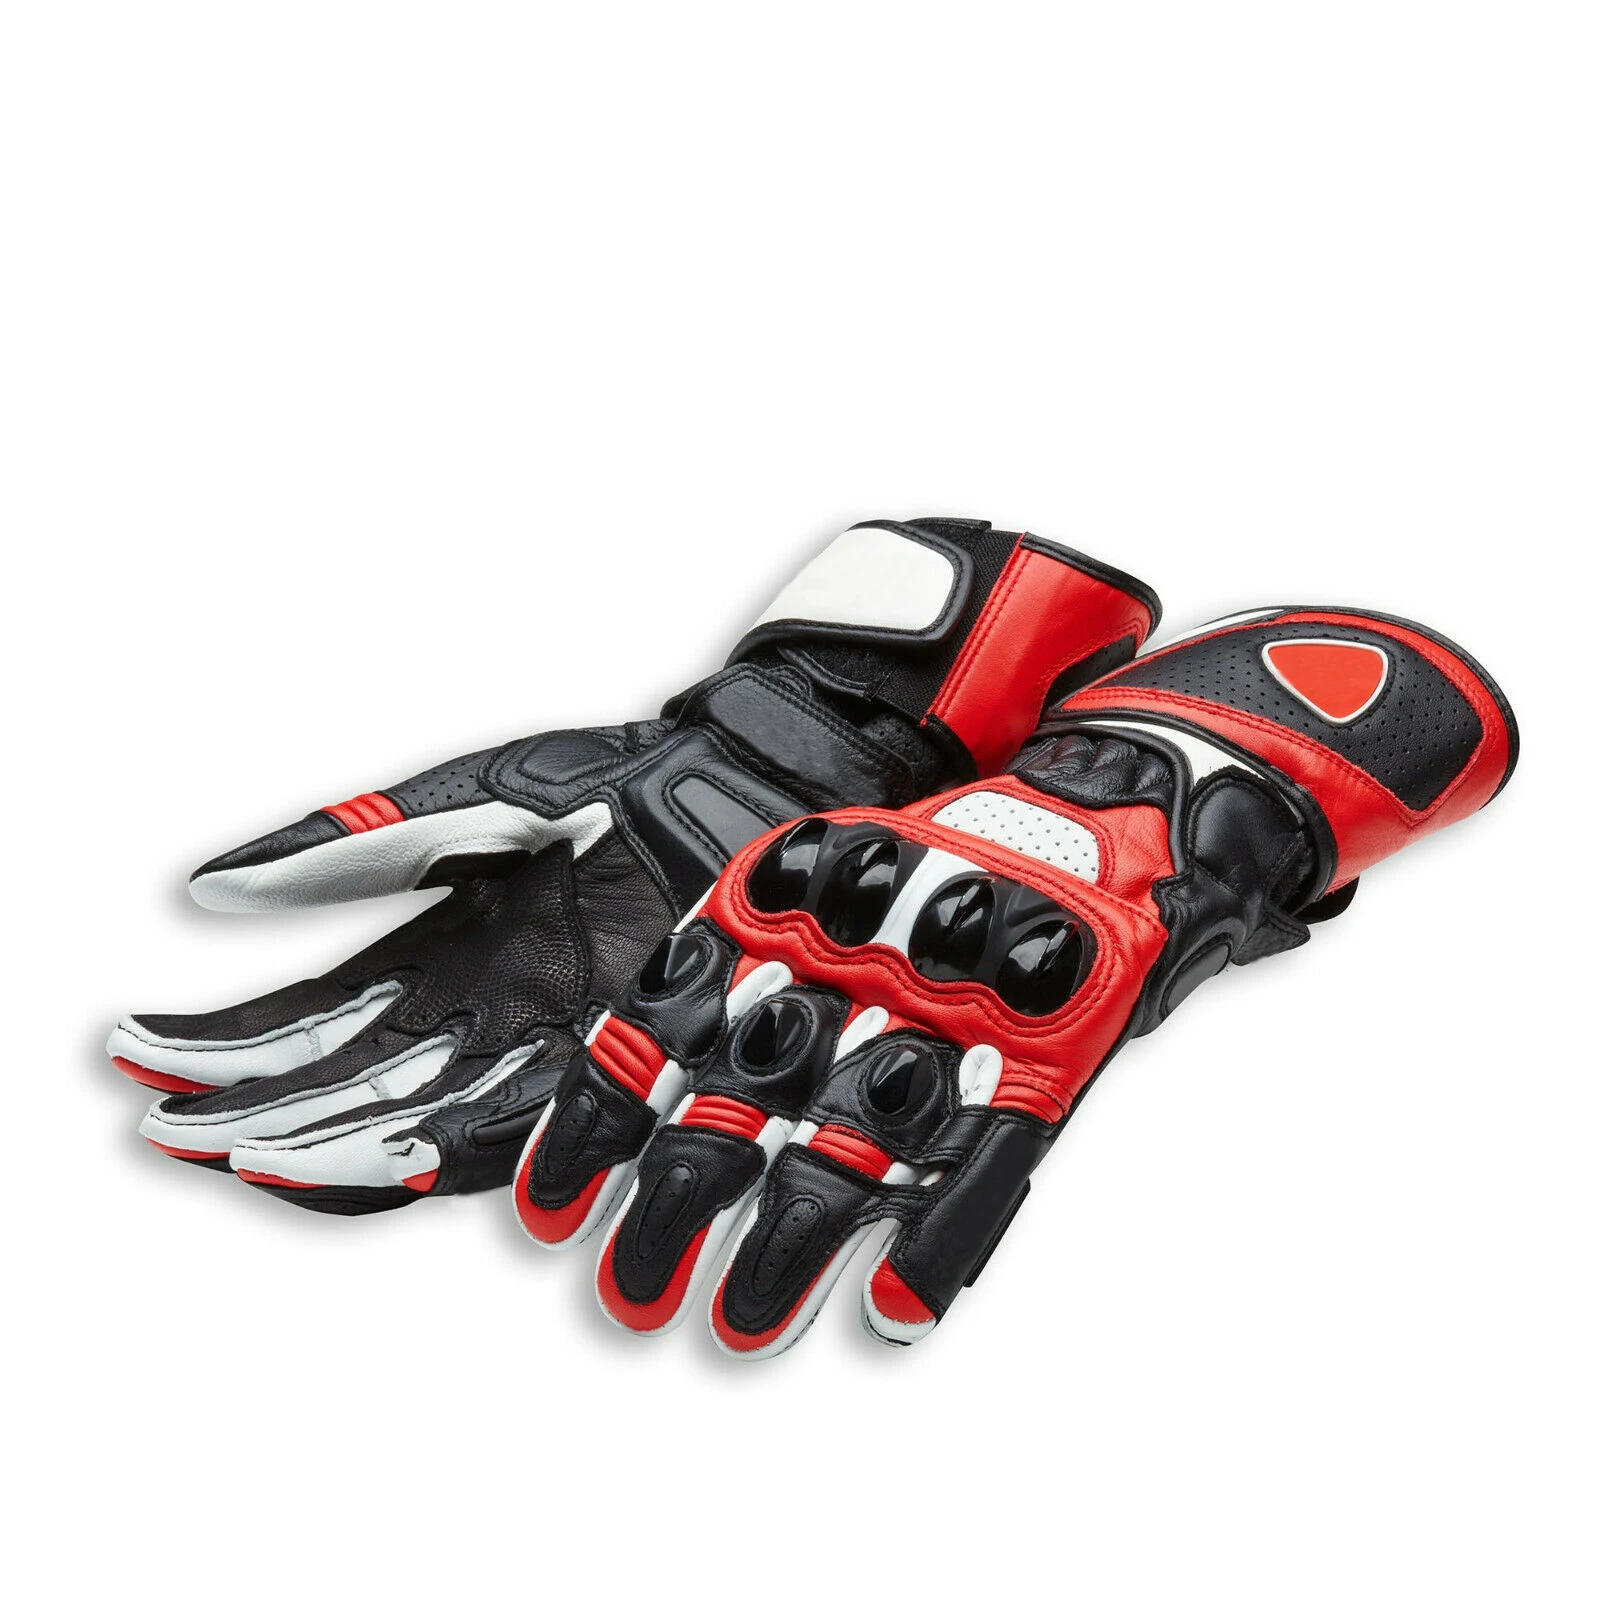 New 2 Colors 100% Genuine Leather Speed Air C1 Motorcycle Gloves Racing Driving Motorbike Original Cowhide Gloves